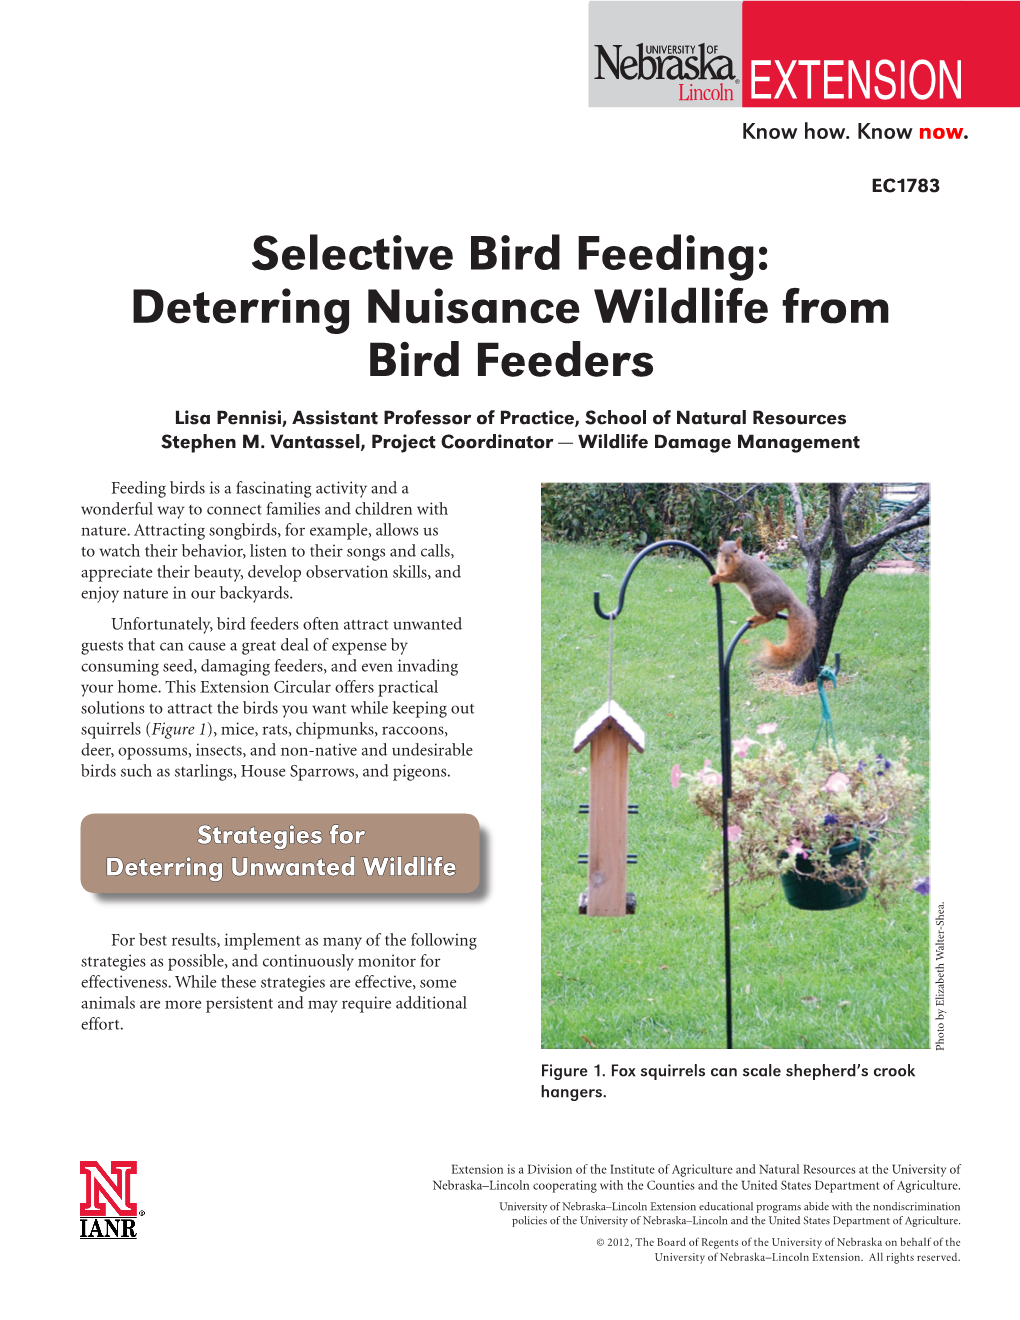 Selective Bird Feeding: Deterring Nuisance Wildlife from Bird Feeders